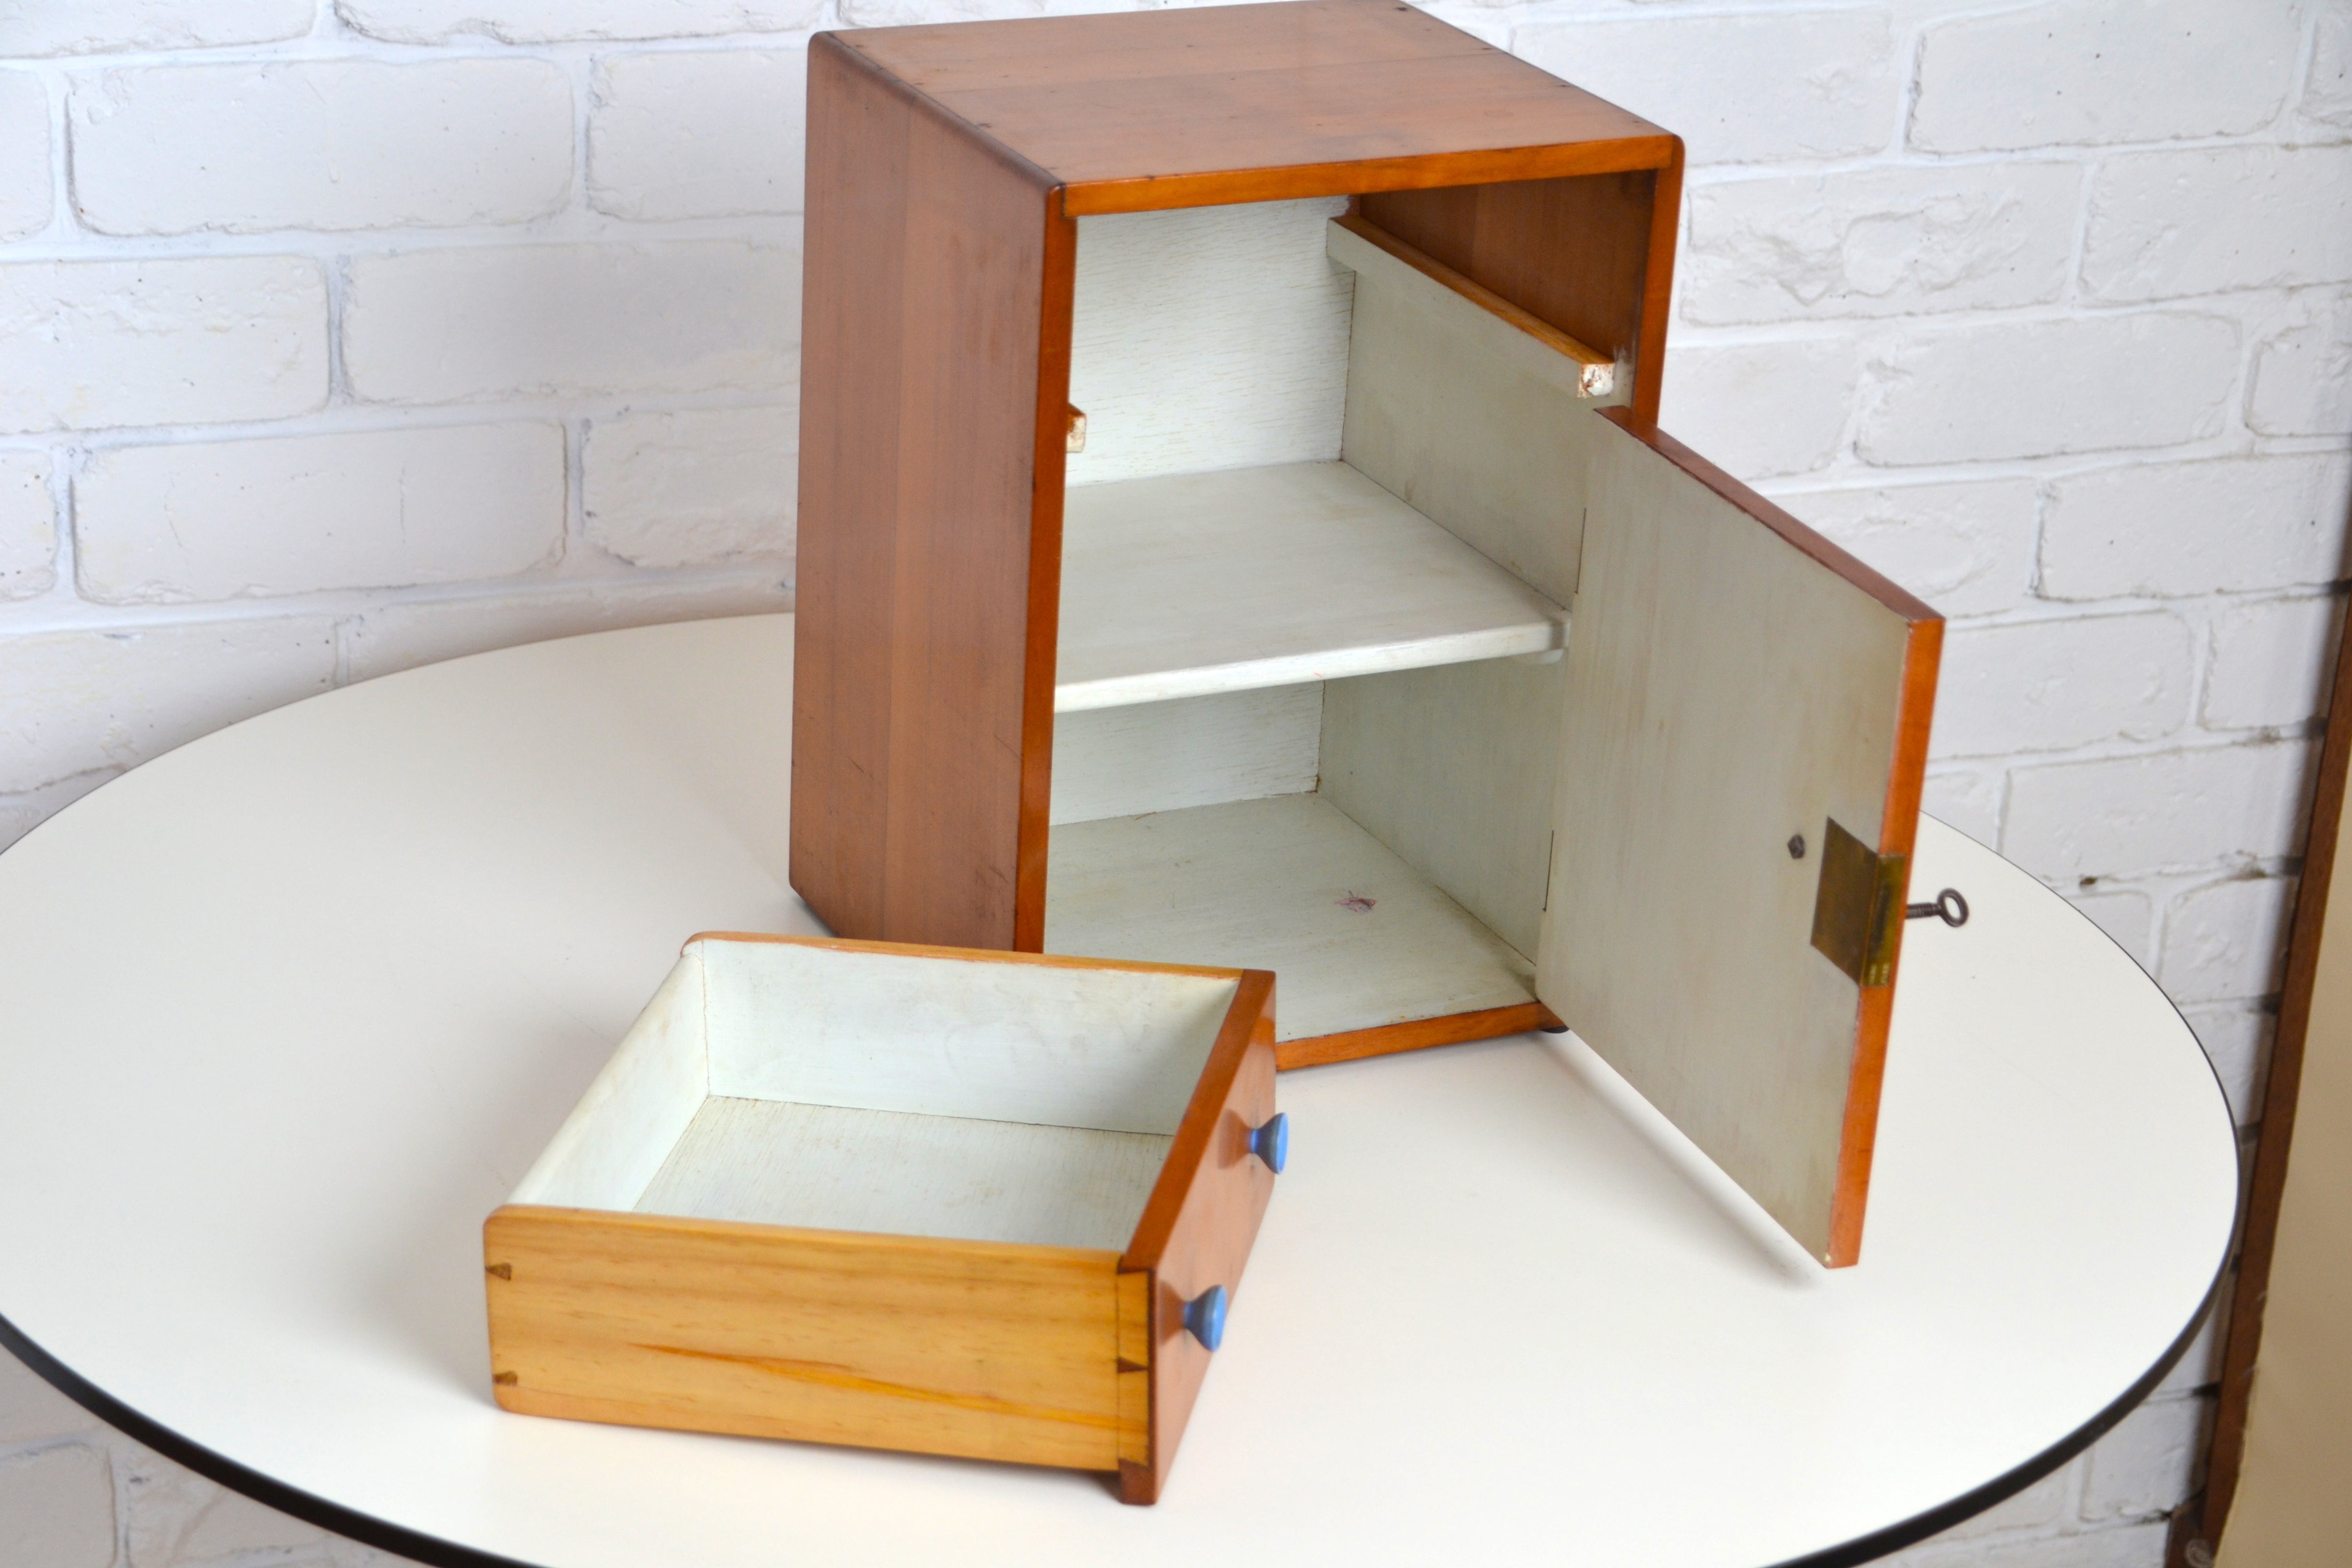 Mid century Australian Apprentice's chest / bedside table - solid wood lock & key